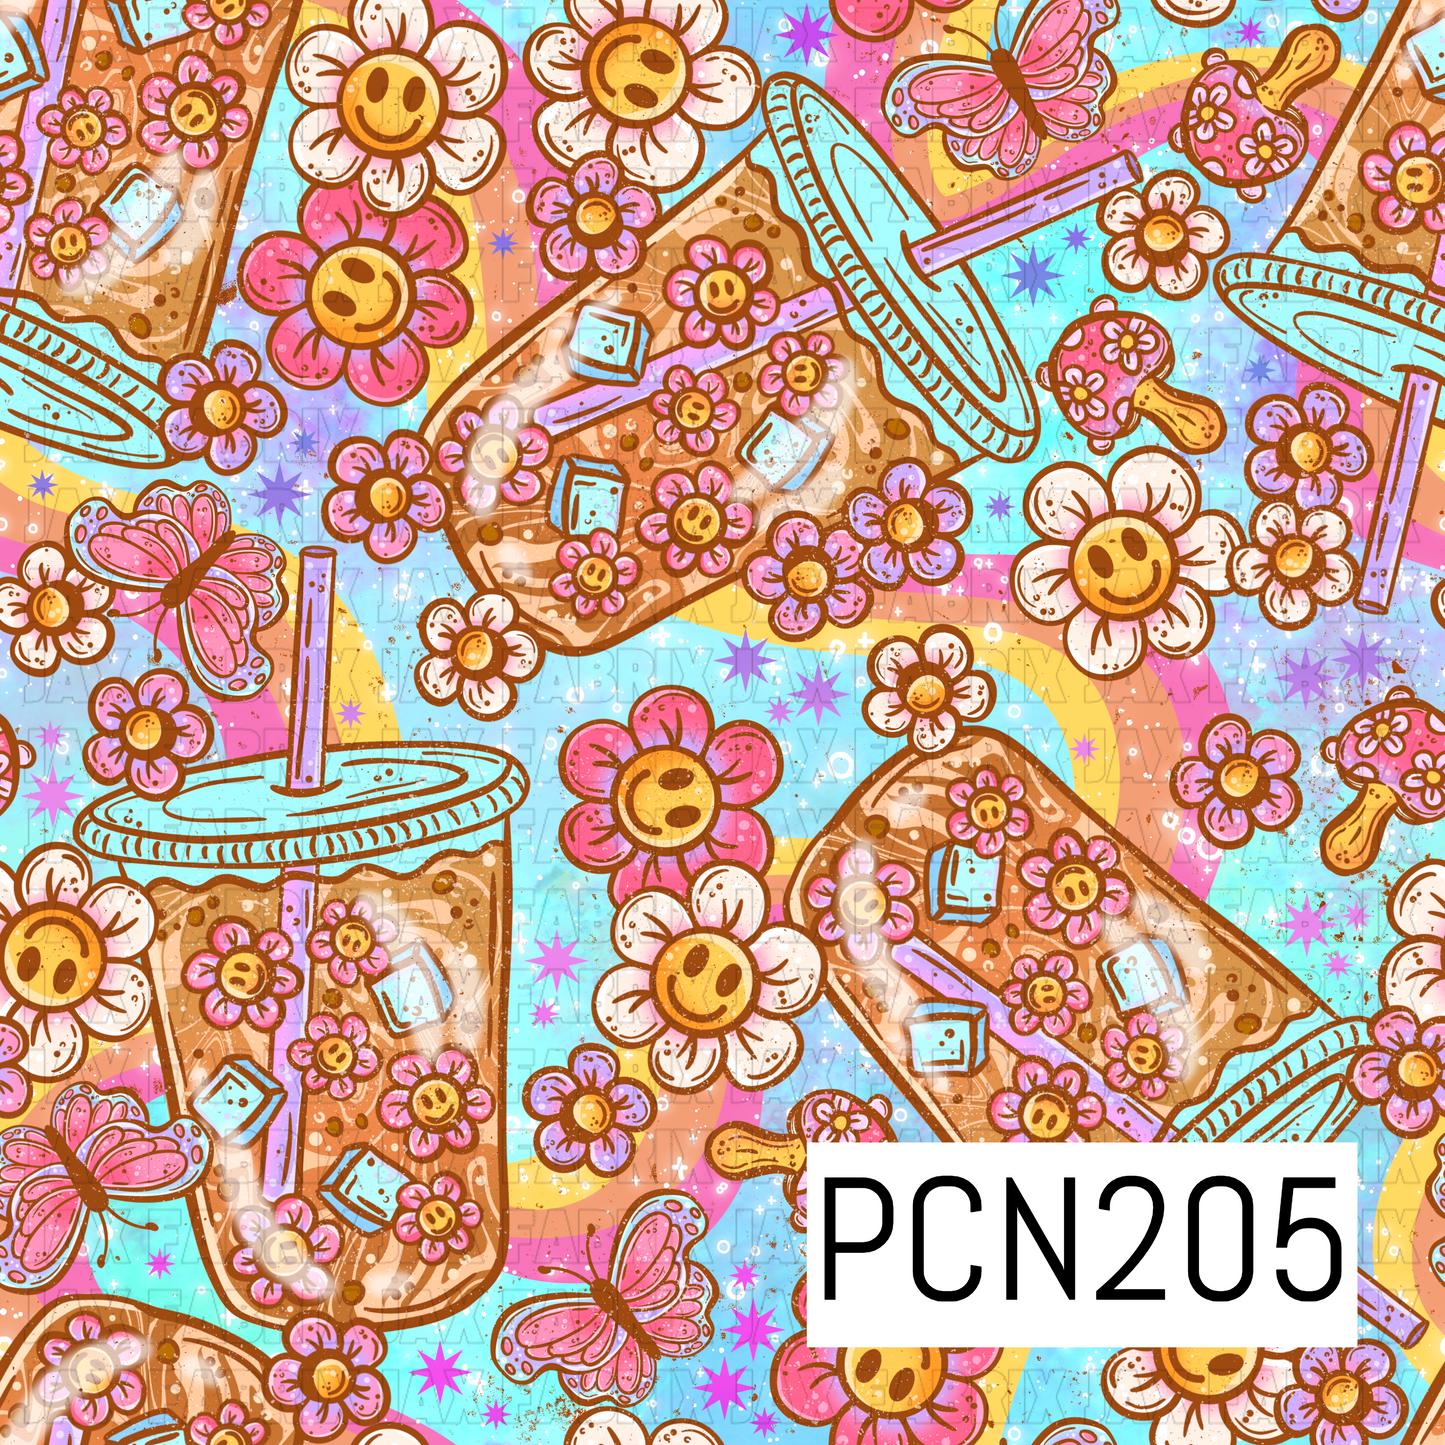 PCN205